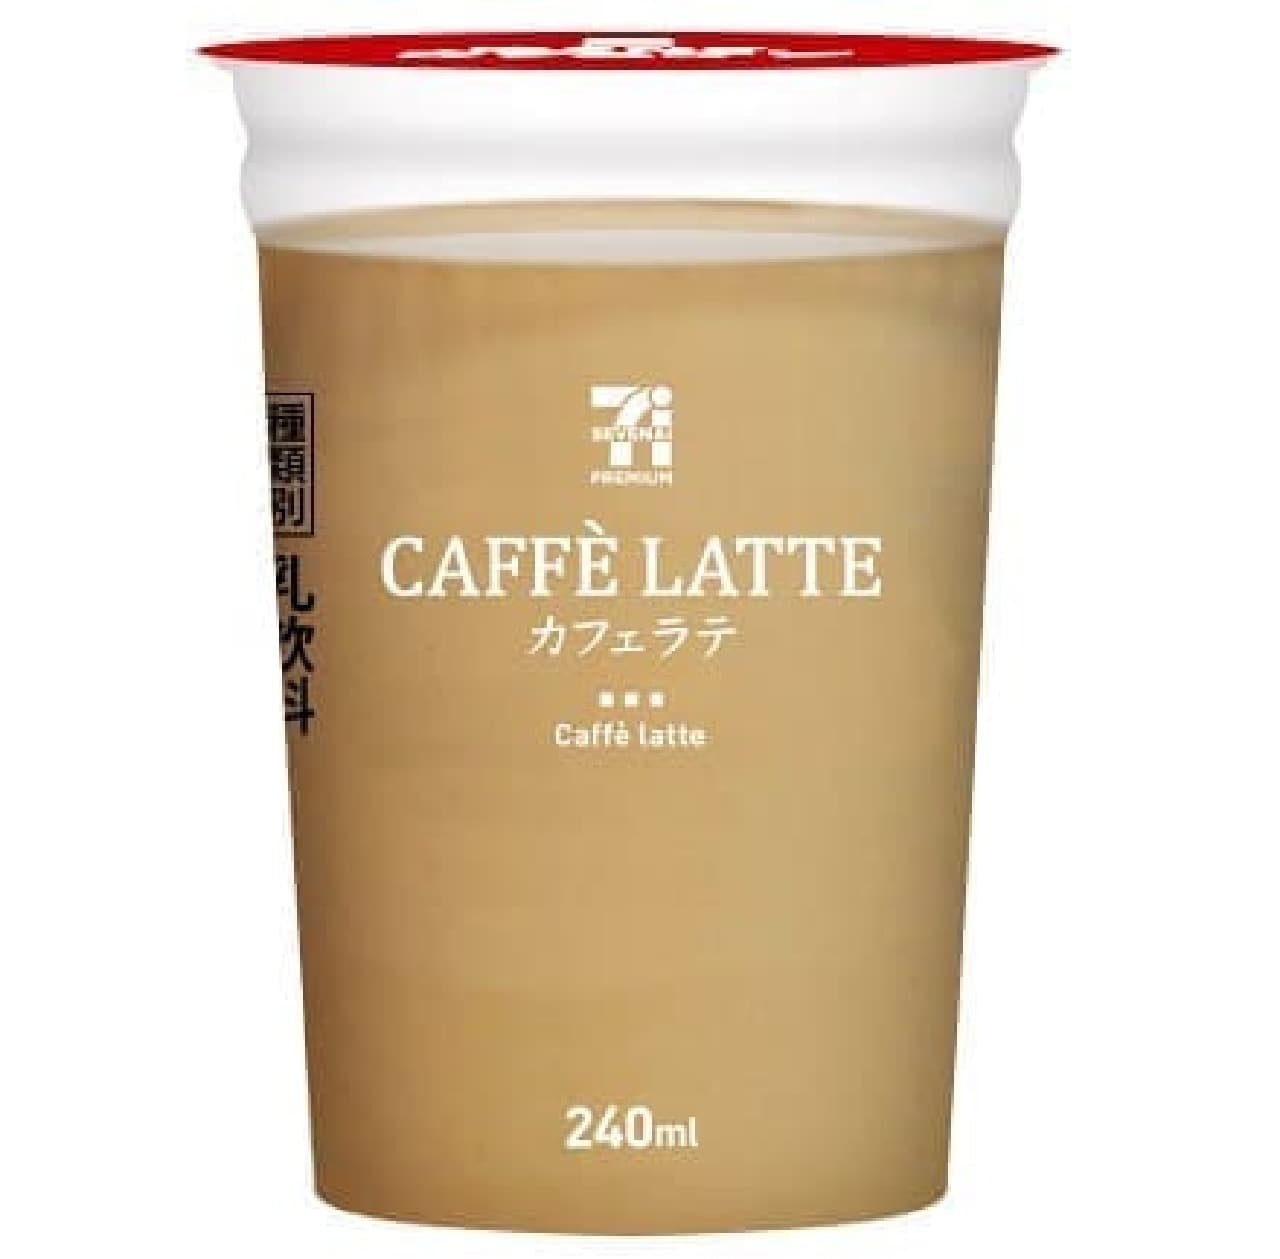 7-ELEVEN Premium Cafe Latte